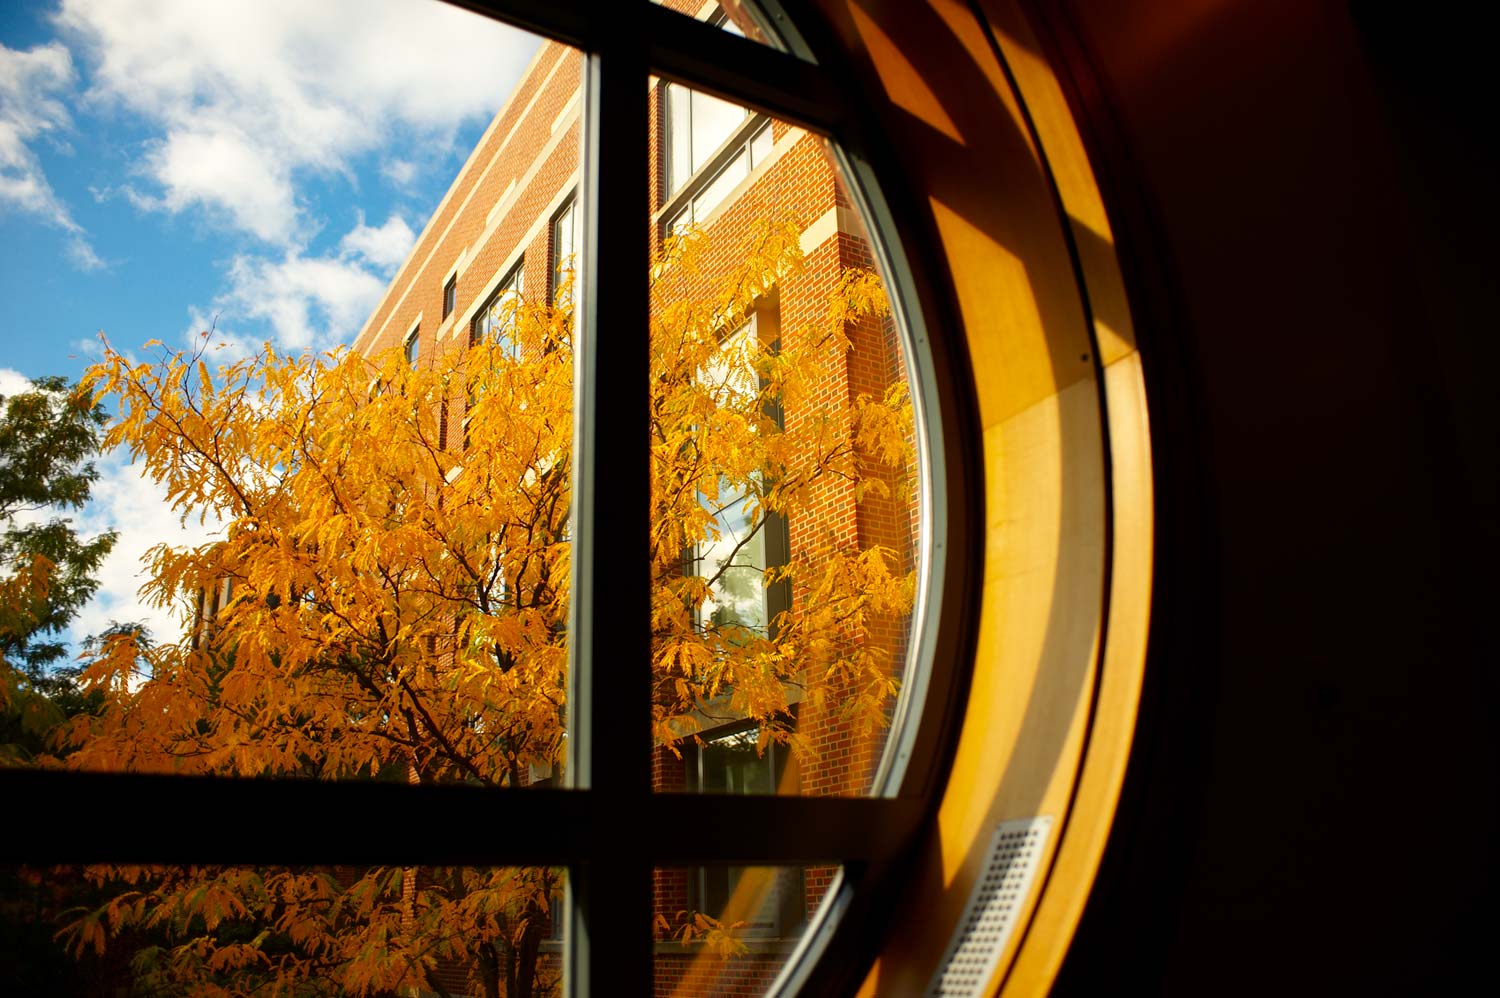 Penn Law building through a window